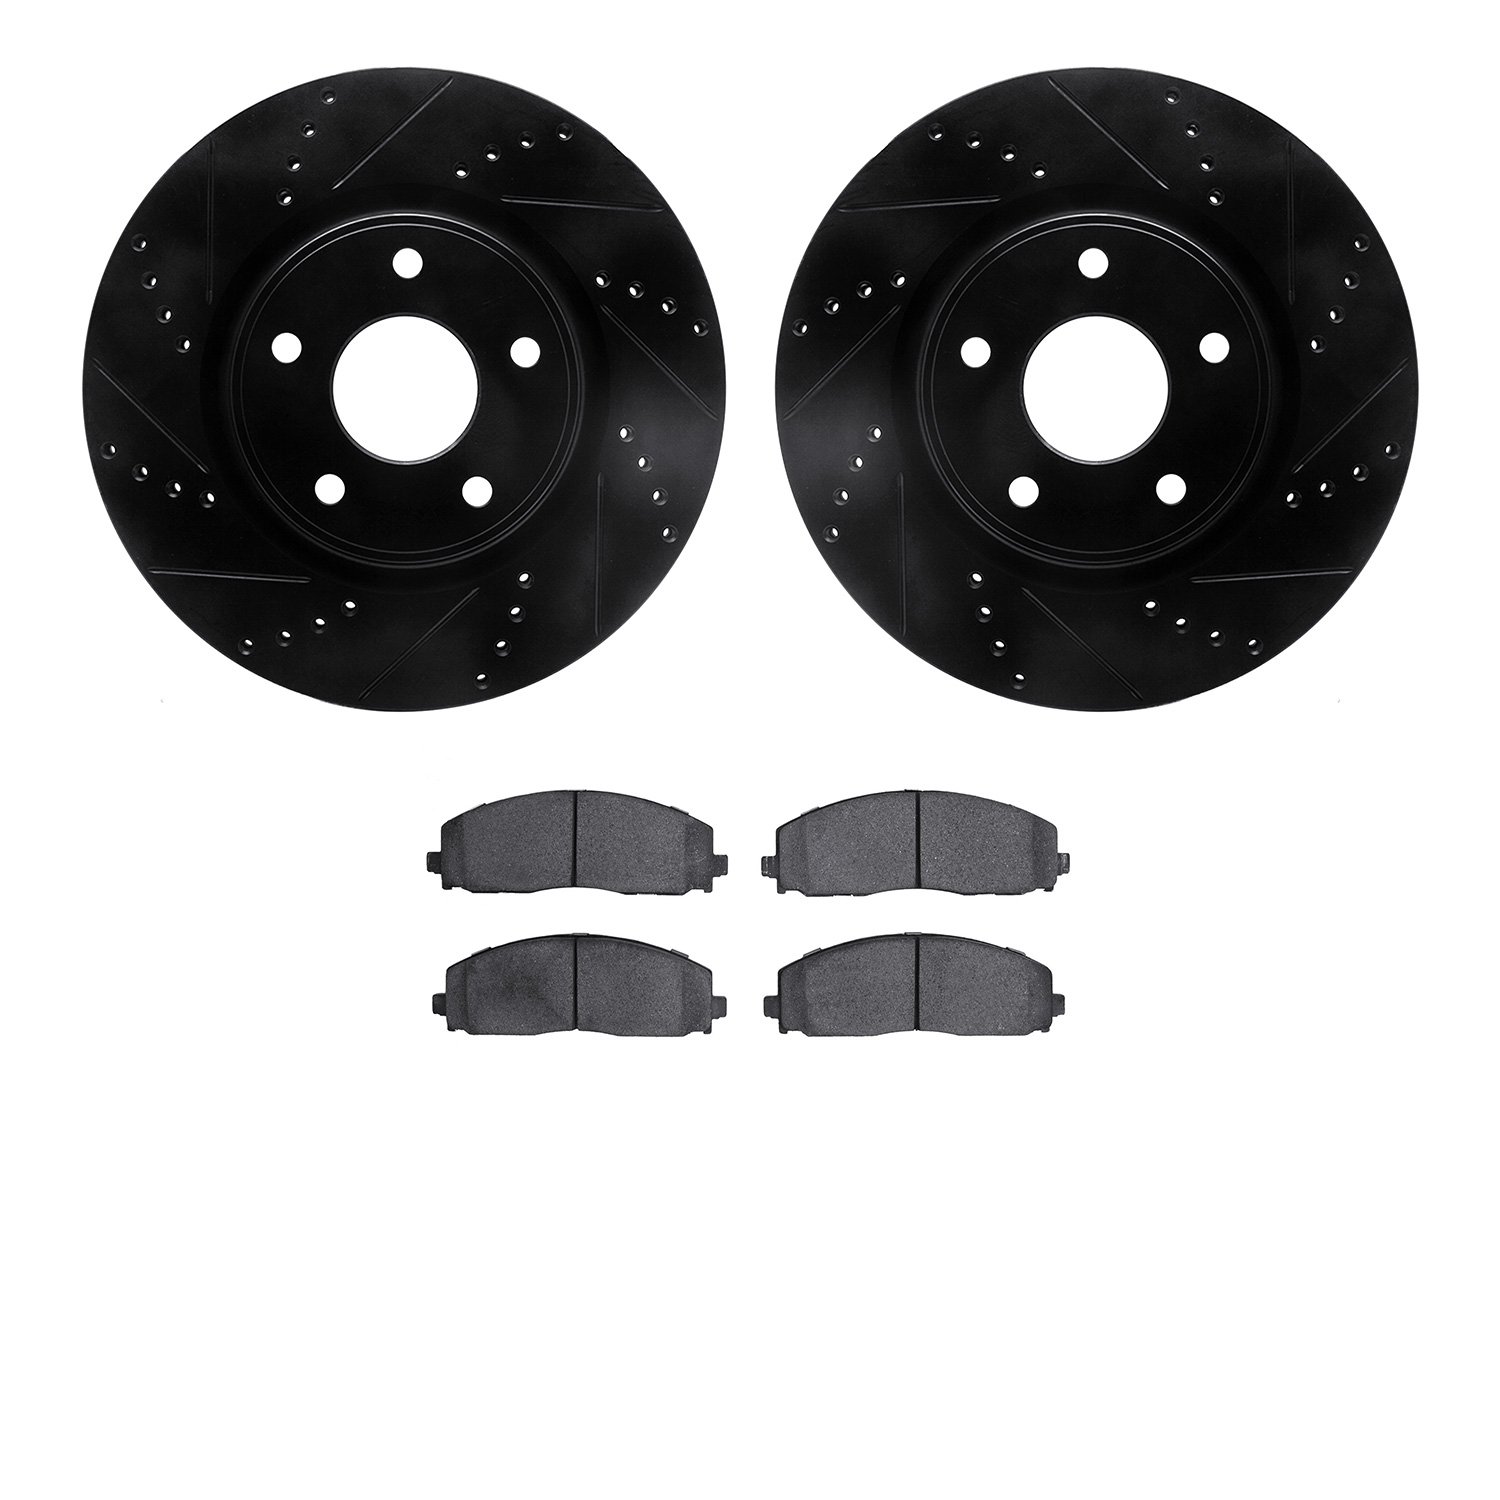 8302-40093 Drilled/Slotted Brake Rotors with 3000-Series Ceramic Brake Pads Kit [Black], Fits Select Multiple Makes/Models, Posi